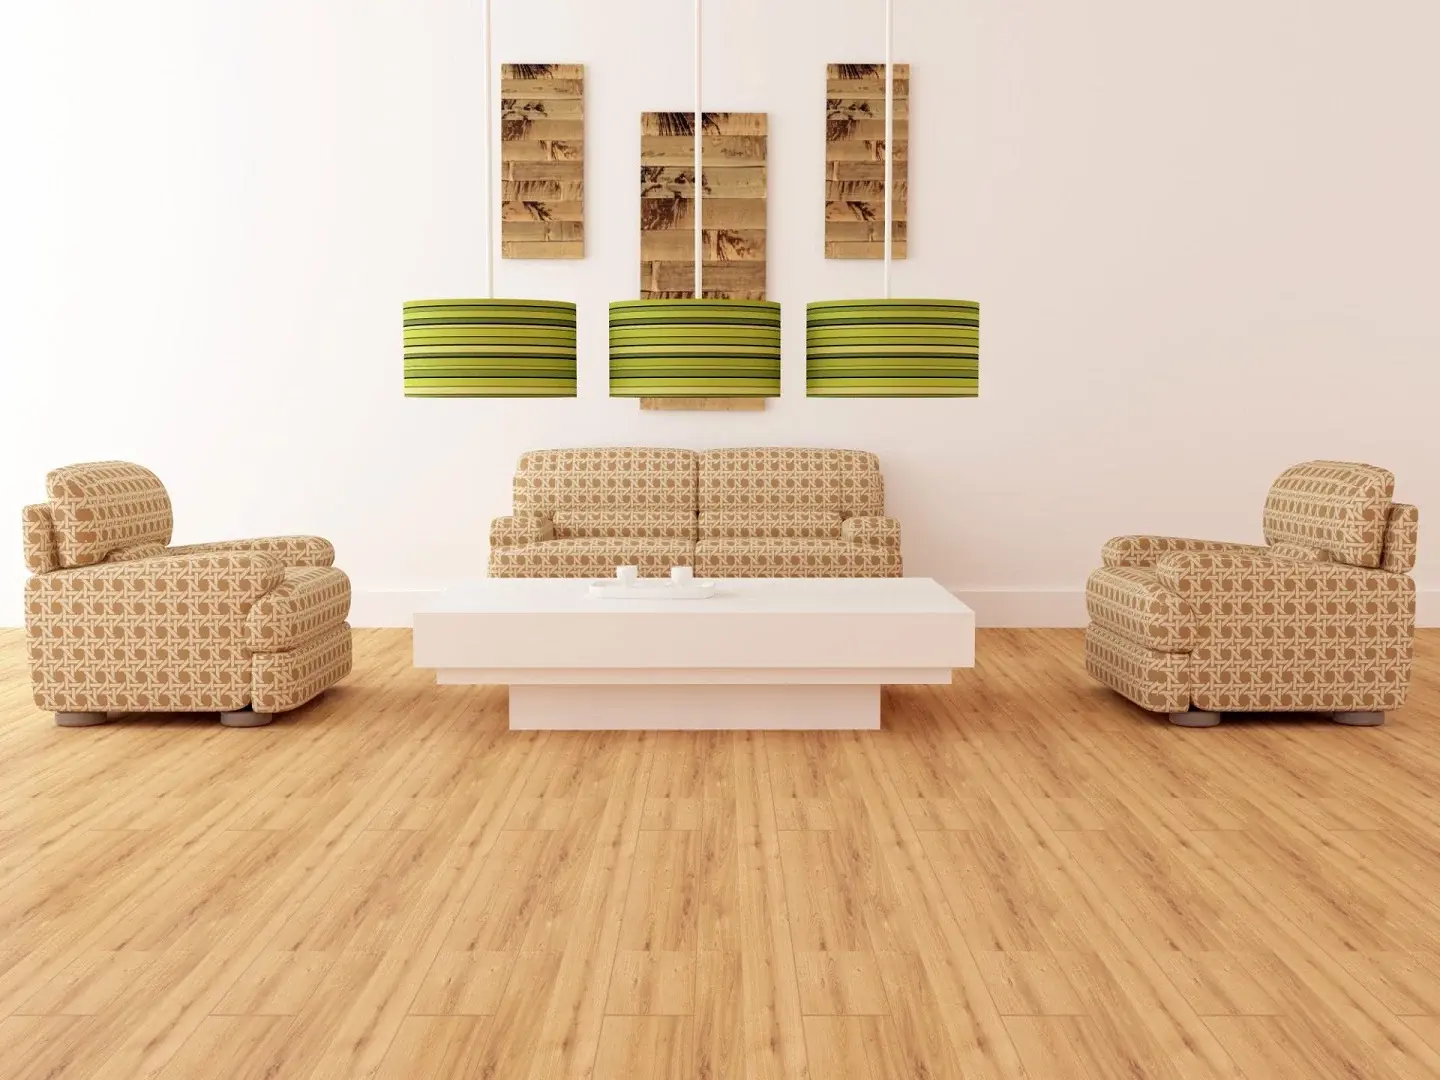 Woven sisal rug on wood flooring